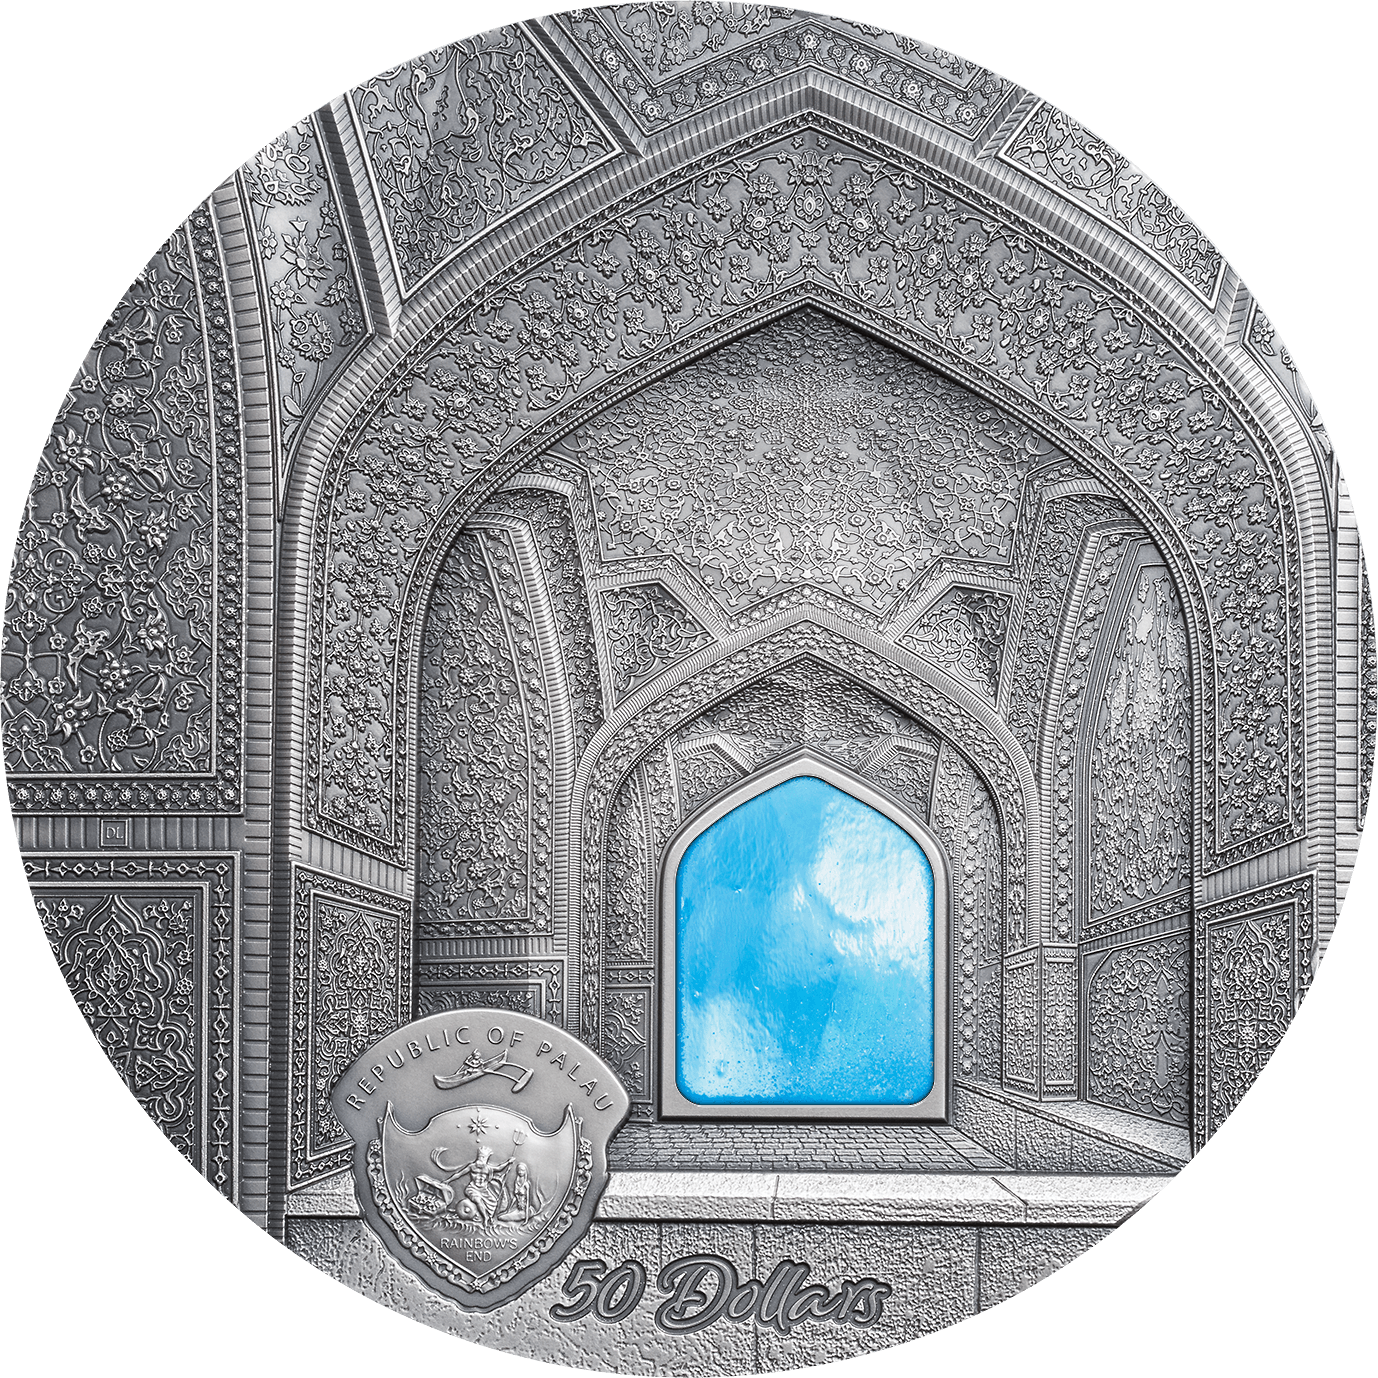 TIFFANY ART Isfahan 1 Kg Kilo Silver Coin $50 Palau 2020 - PARTHAVA COIN